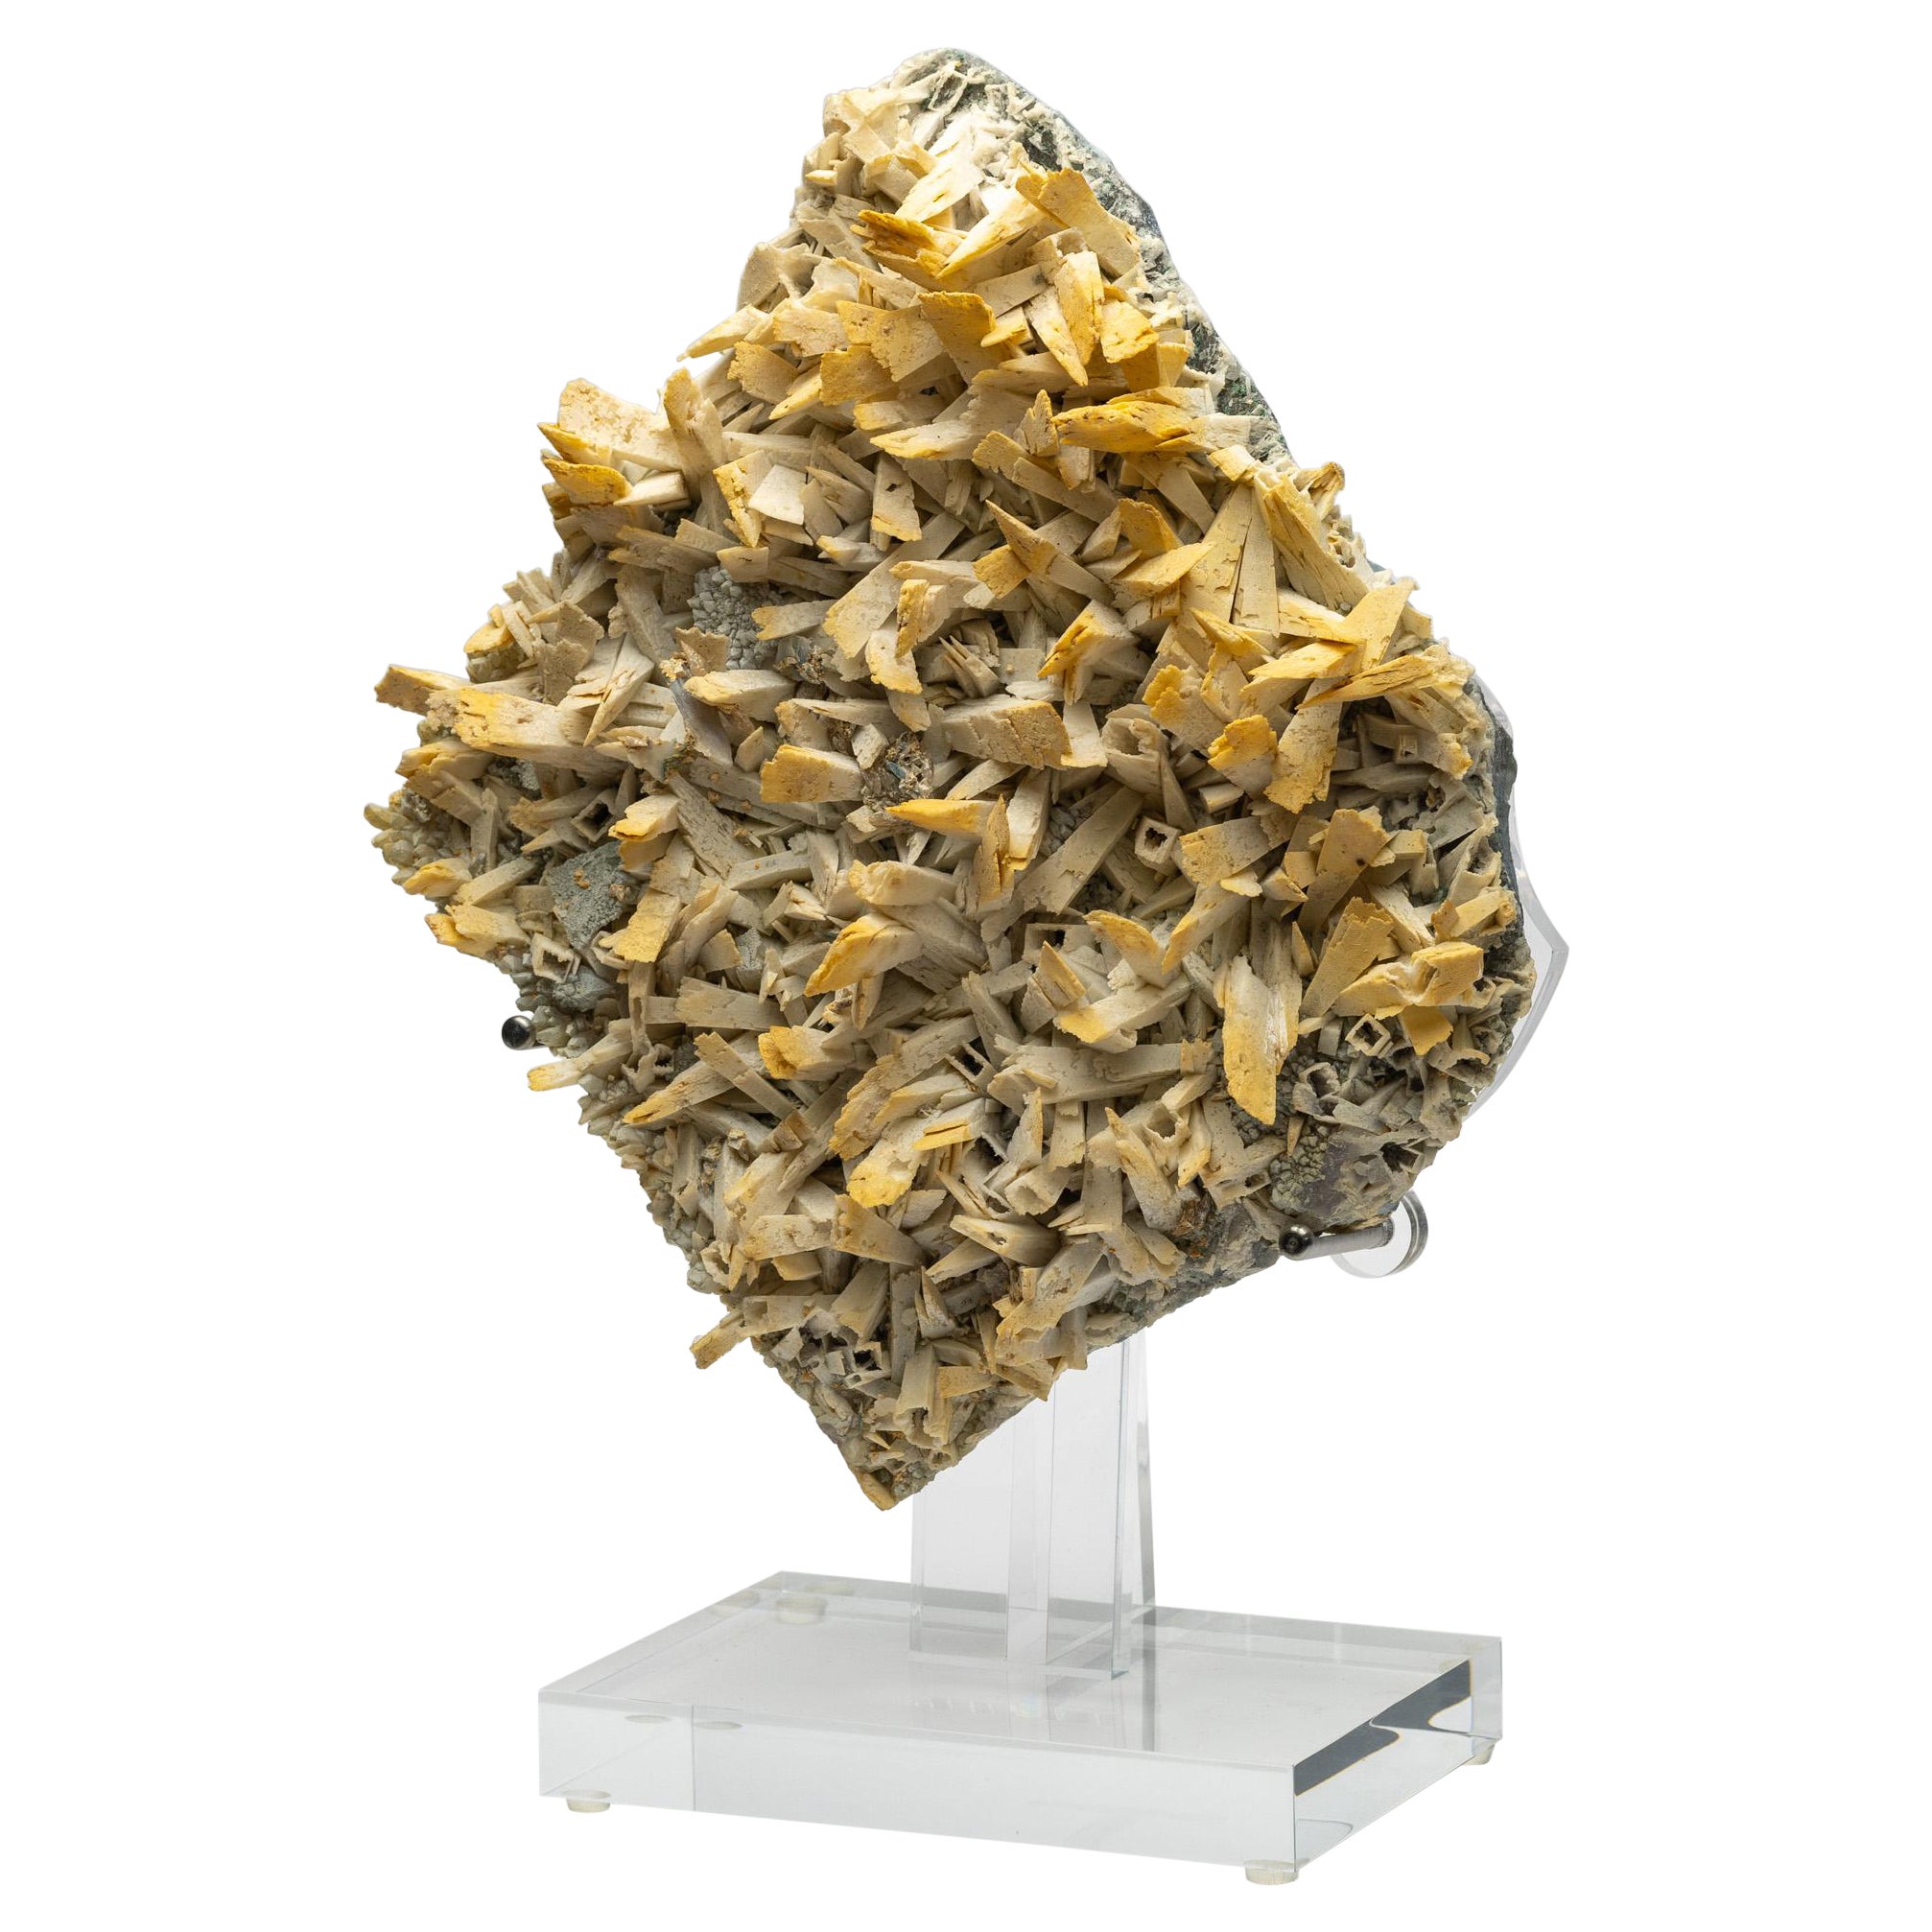 Amethyst flower mounted on custom acrylic base